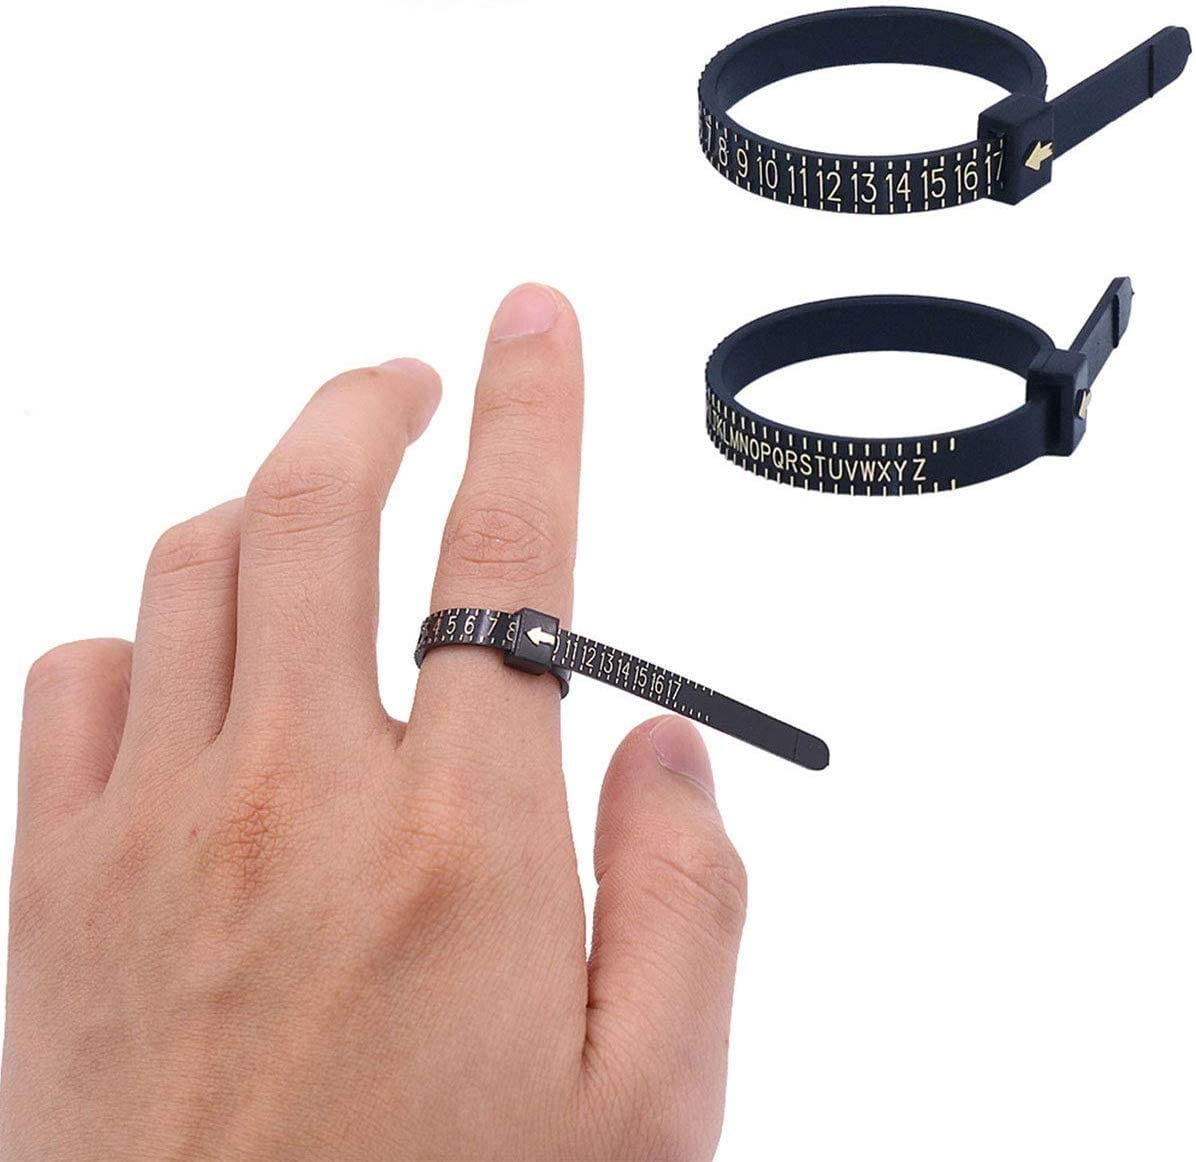 6pcs Ring Sizer Measuring Tool Set with Ring Mandrel US 1-13 Size Black  Ring & Transparent Ring Sizer Adjuster for Loose Rings - AliExpress